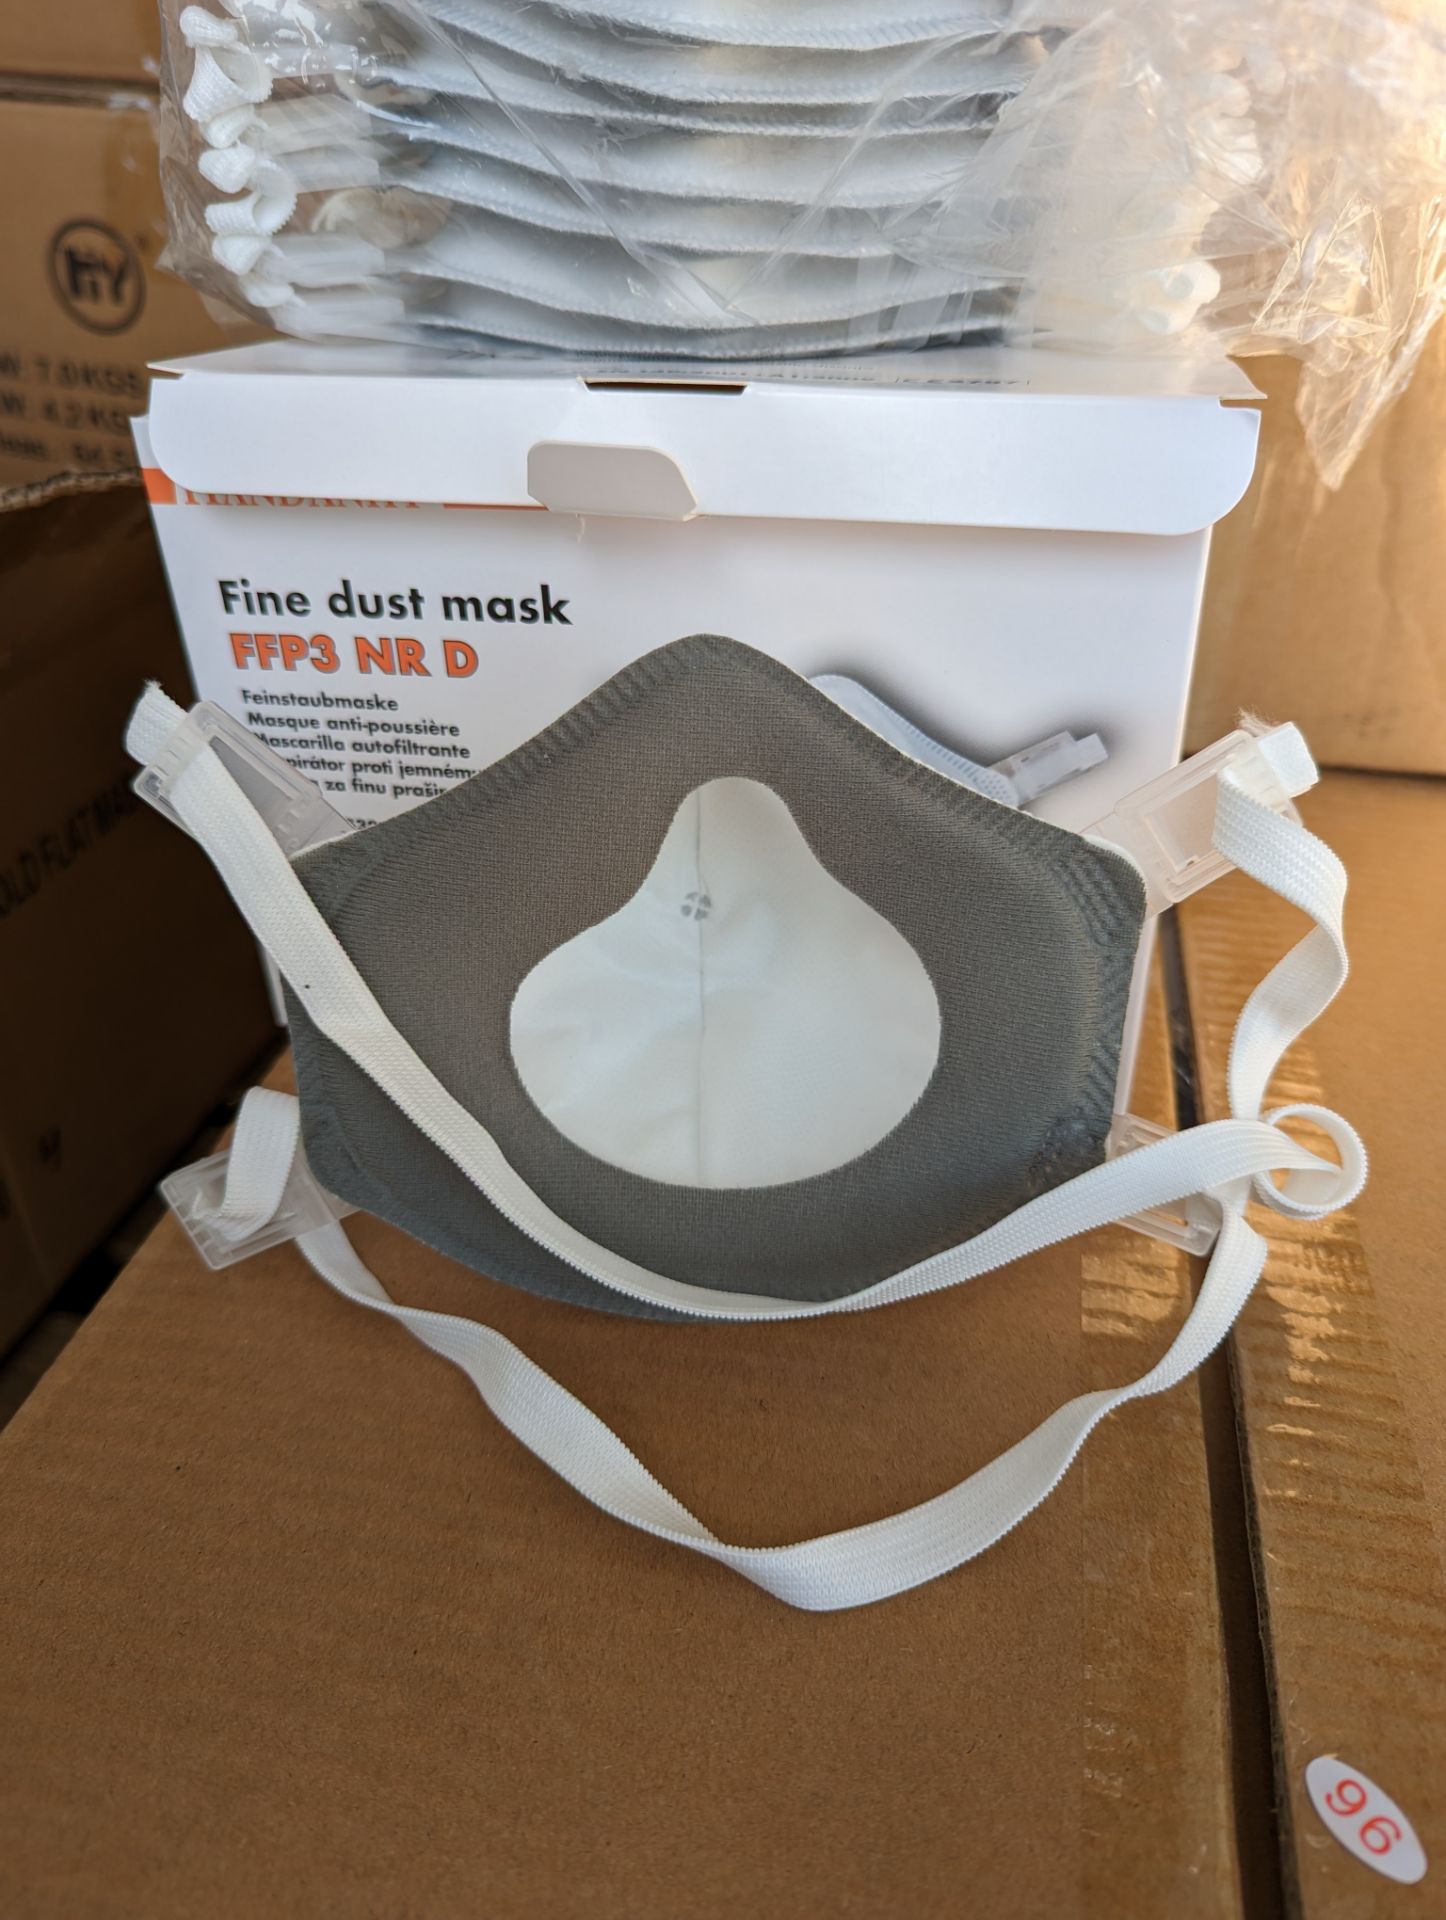 4x Boxes HY9630 FFP3 Filtering Masks